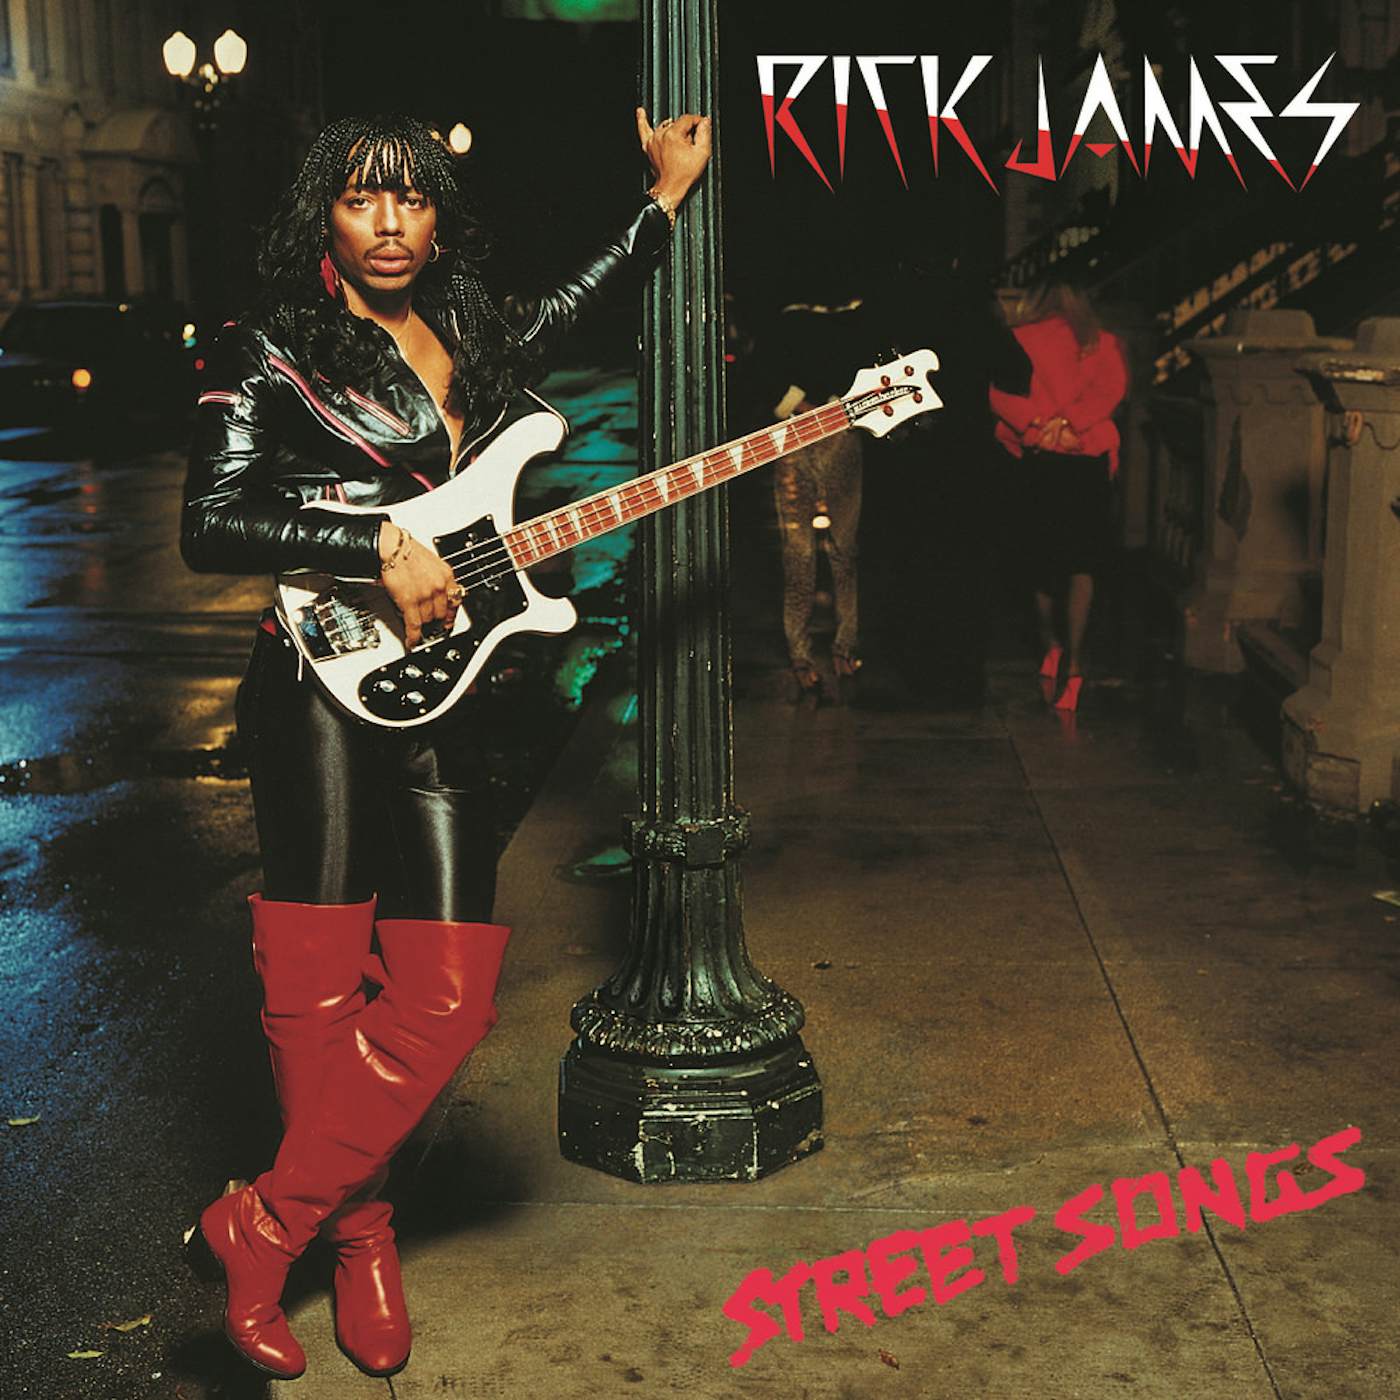 Rick James Street Songs Vinyl Record